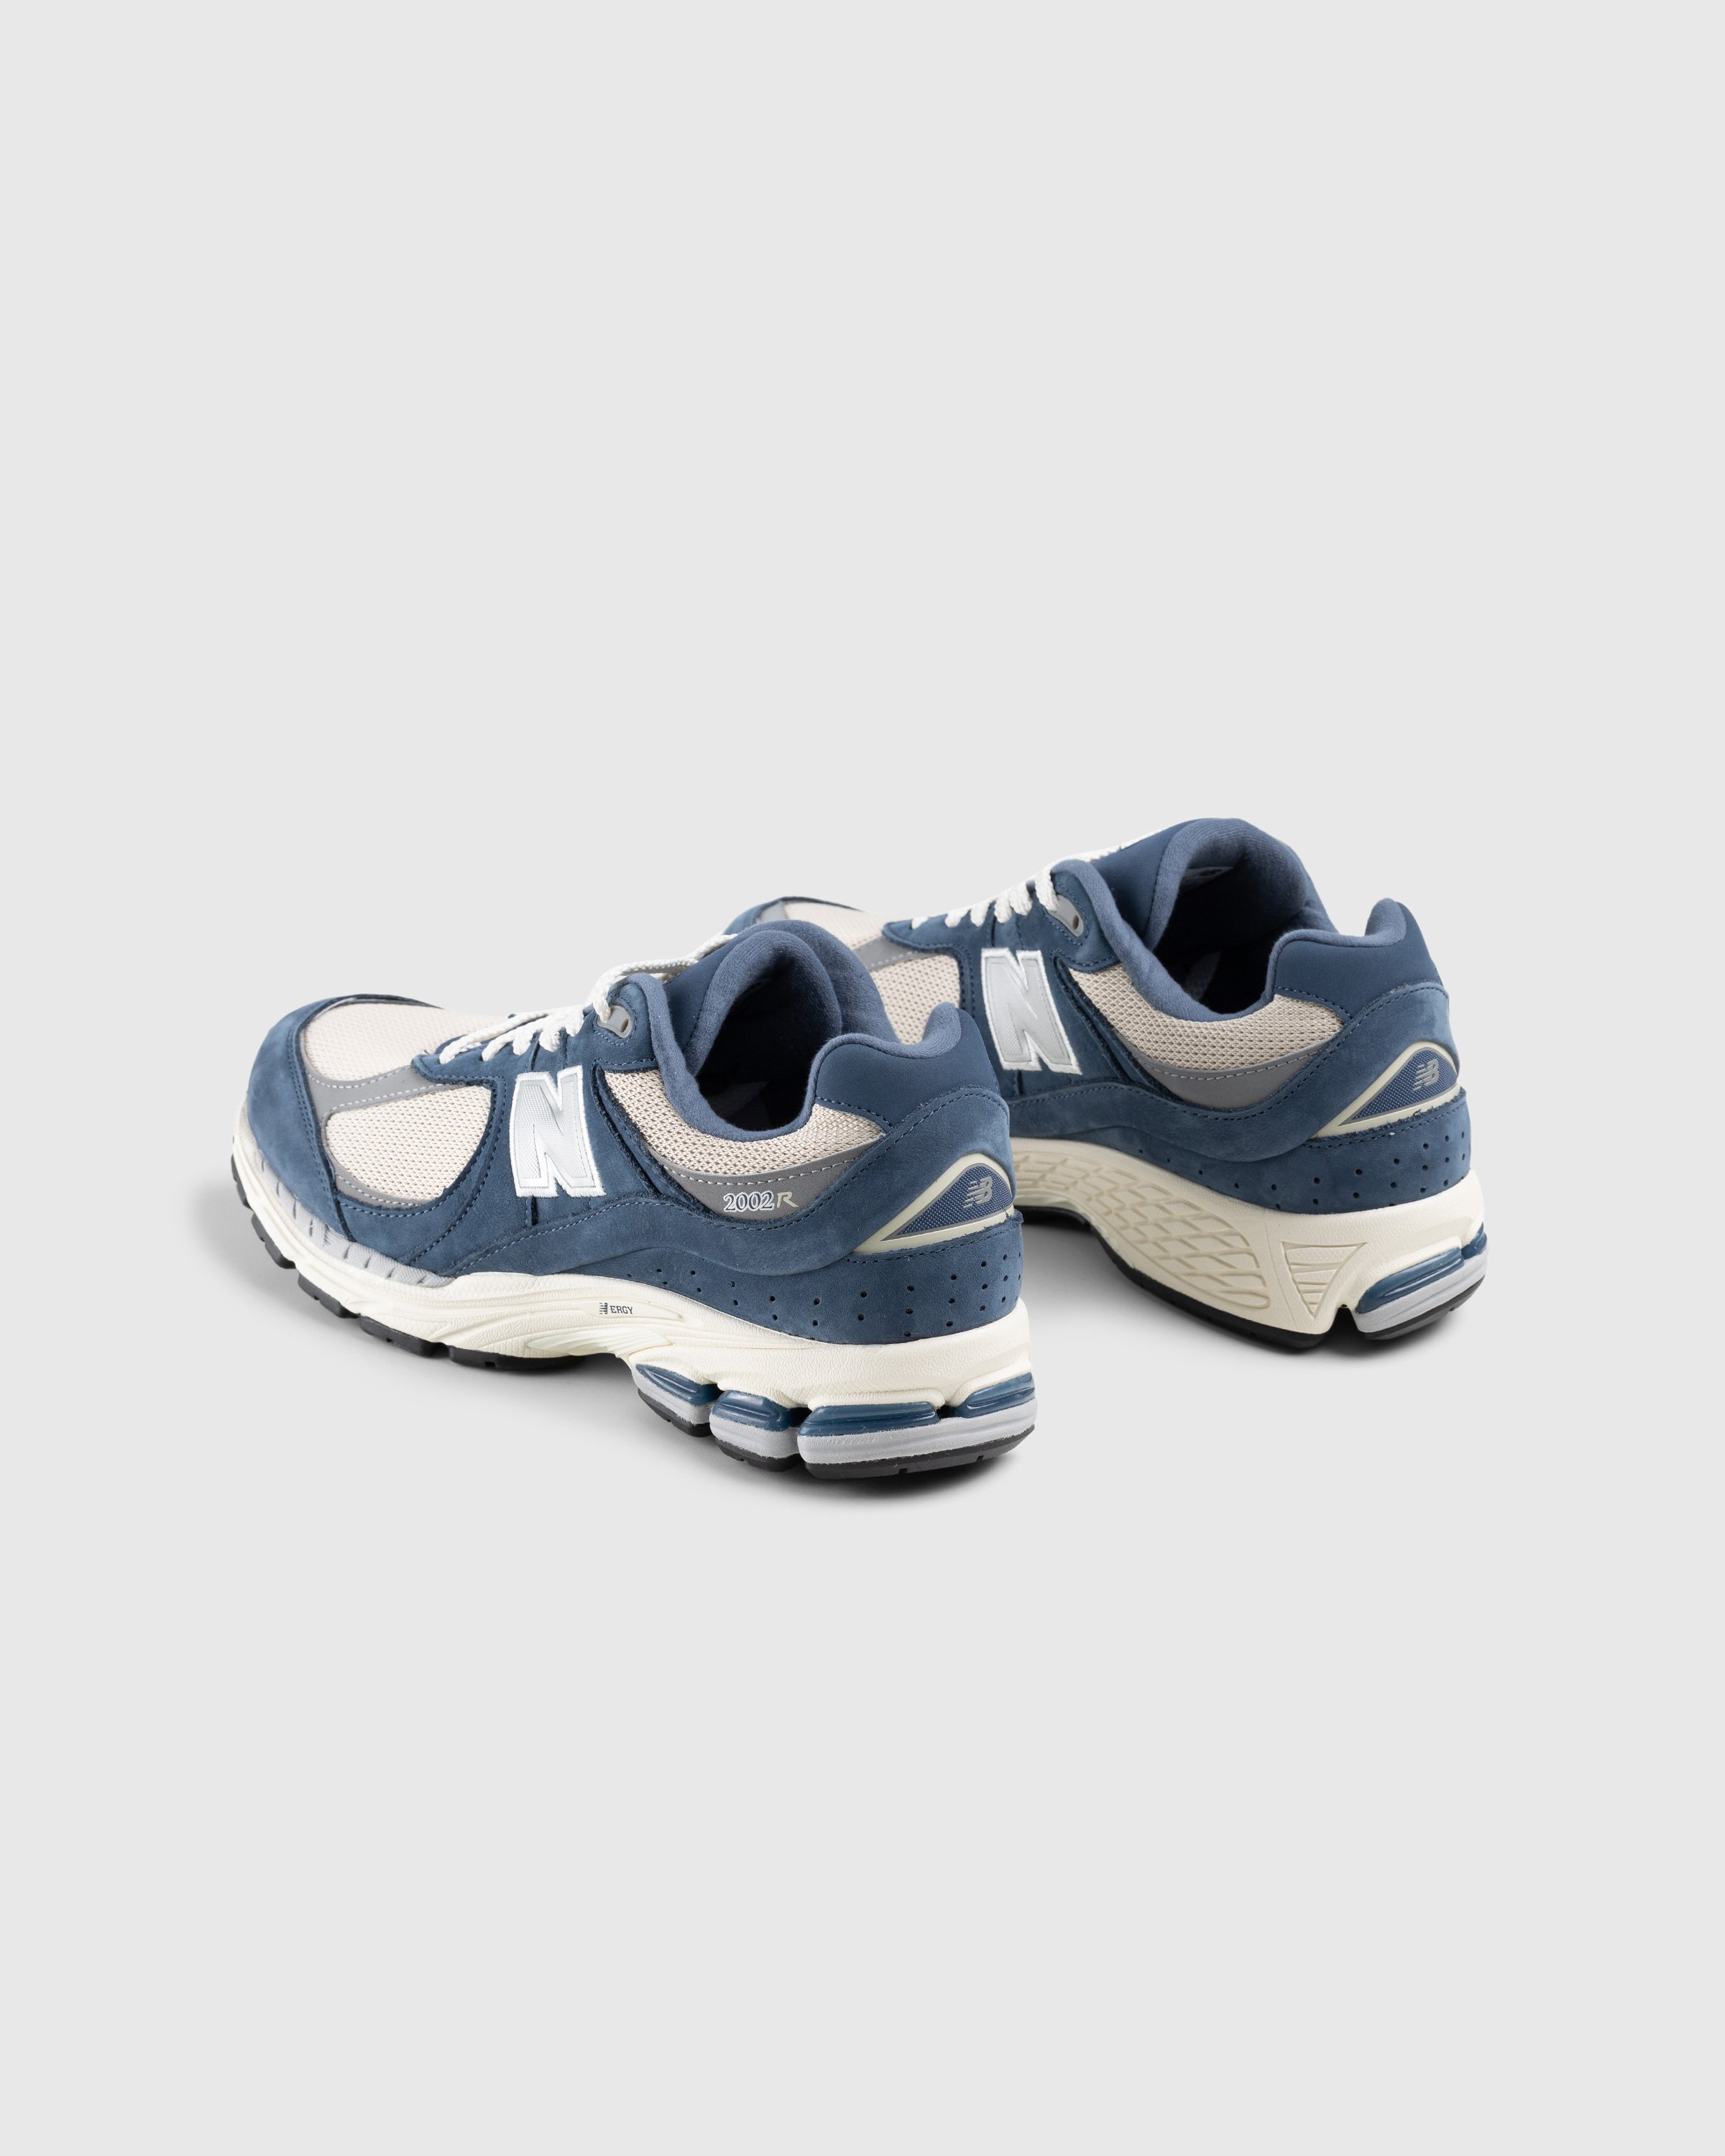 New Balance - M2002RHR Vintage Indigo - Footwear - Blue - Image 4